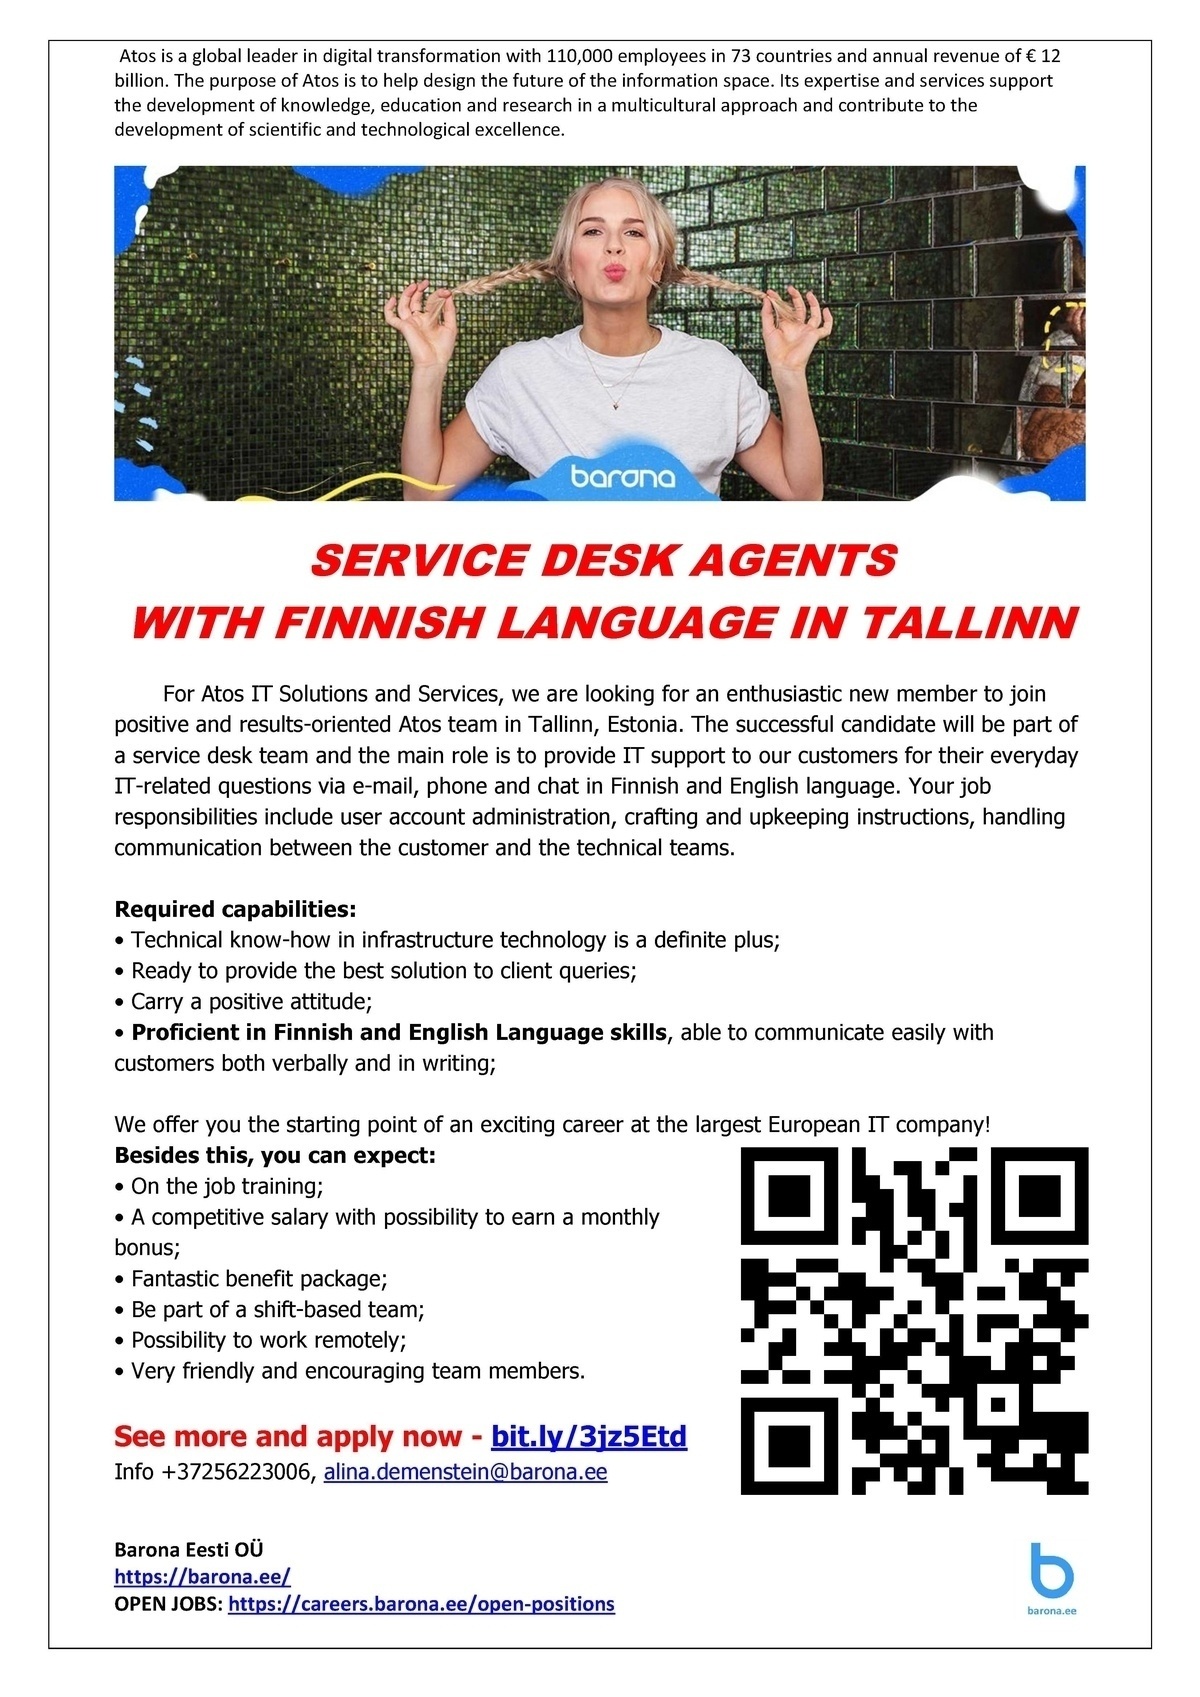 Barona Eesti OÜ Finnish speaking Service Desk agent